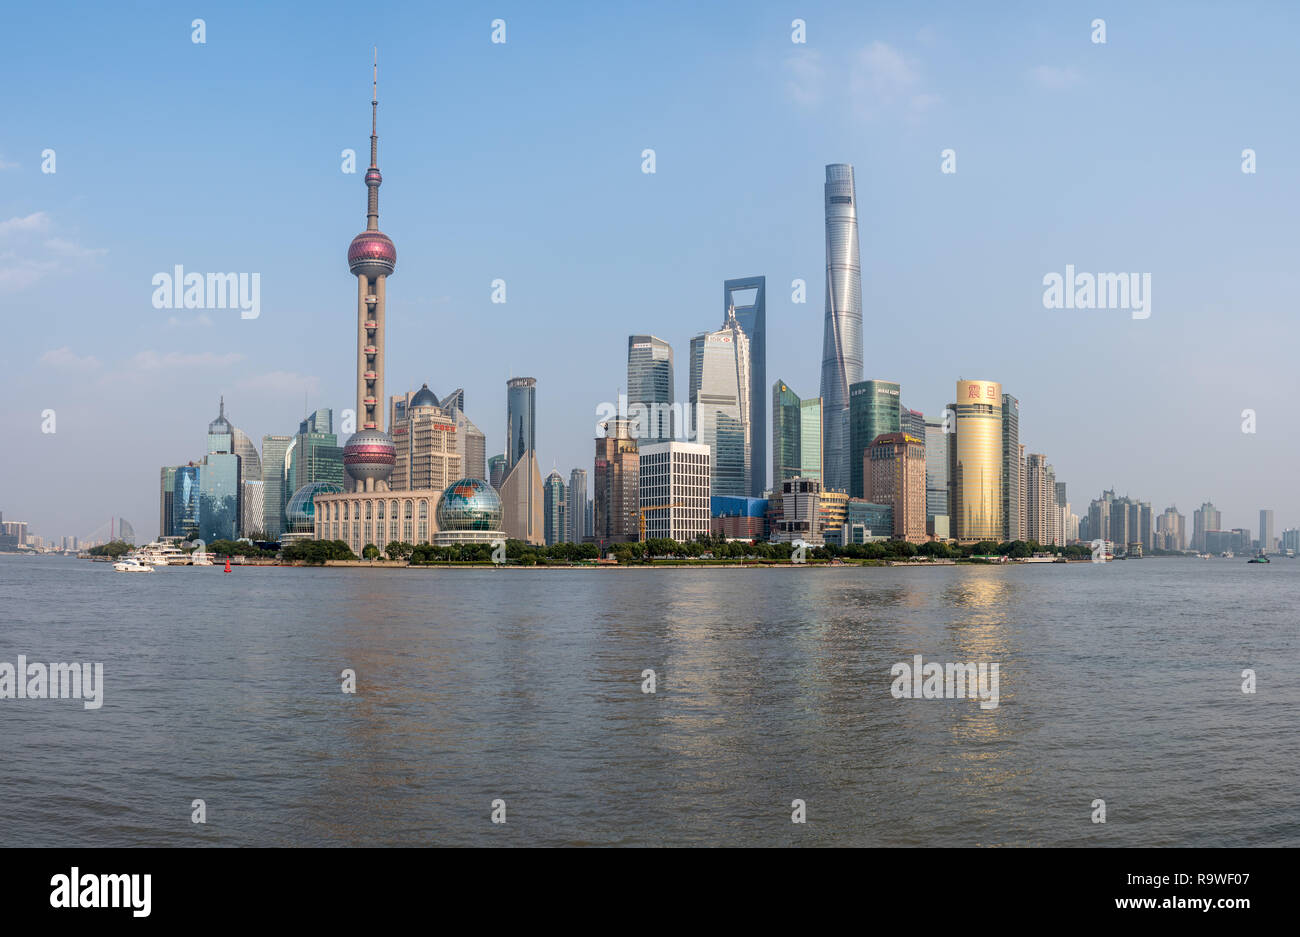 High resolution panorama of Shanghai skyline Stock Photo